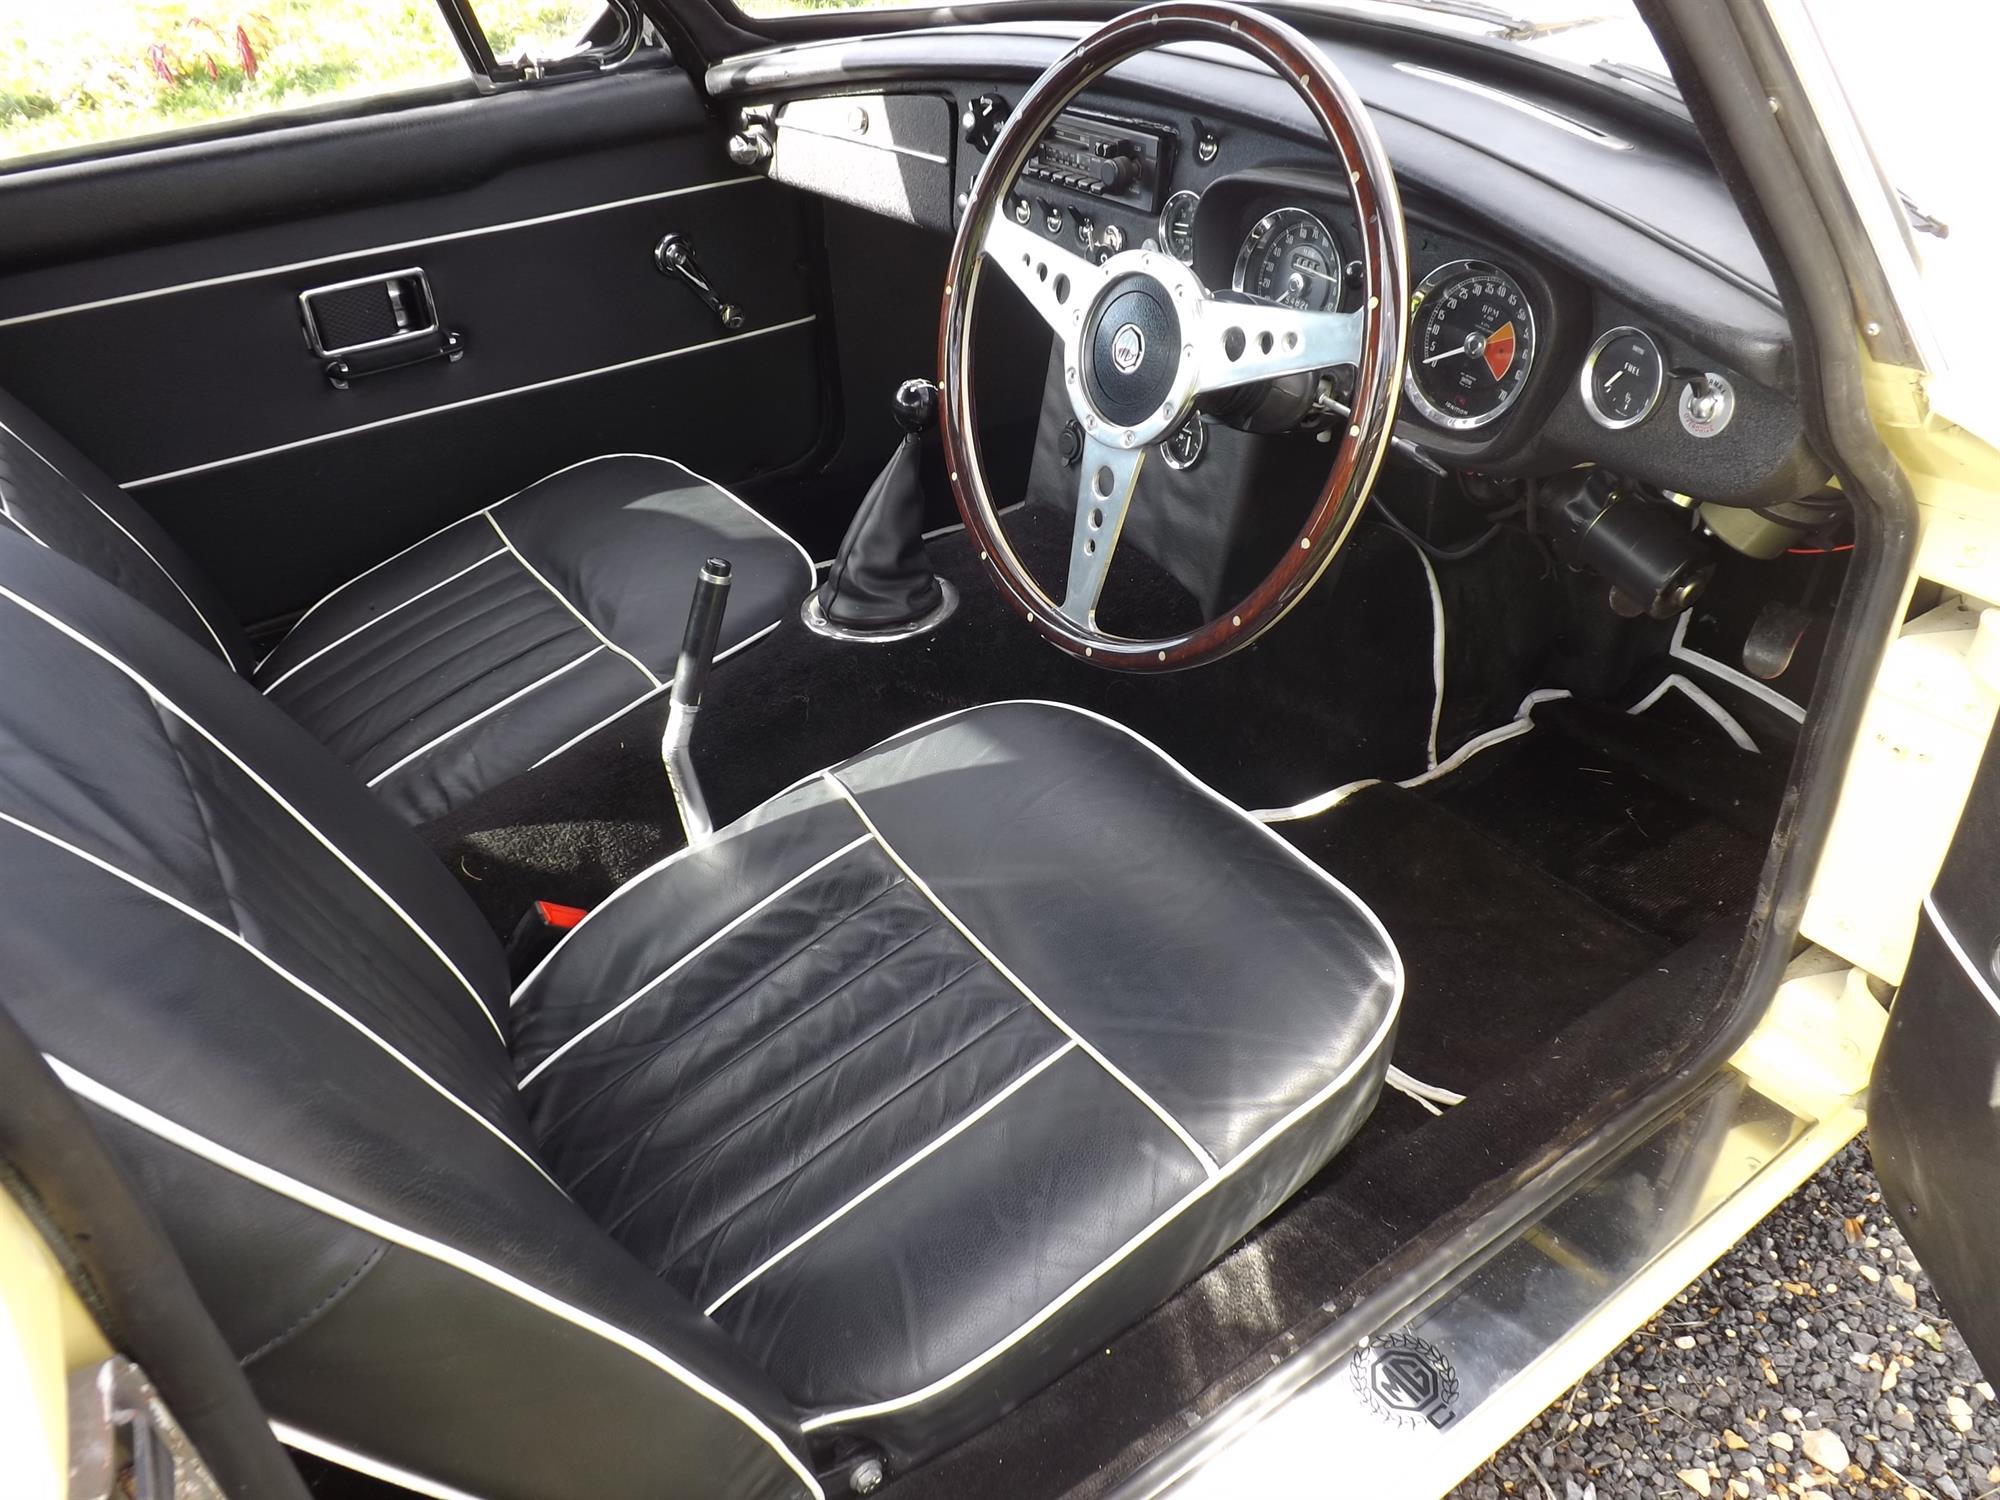 1968 MG C GT - Image 2 of 10